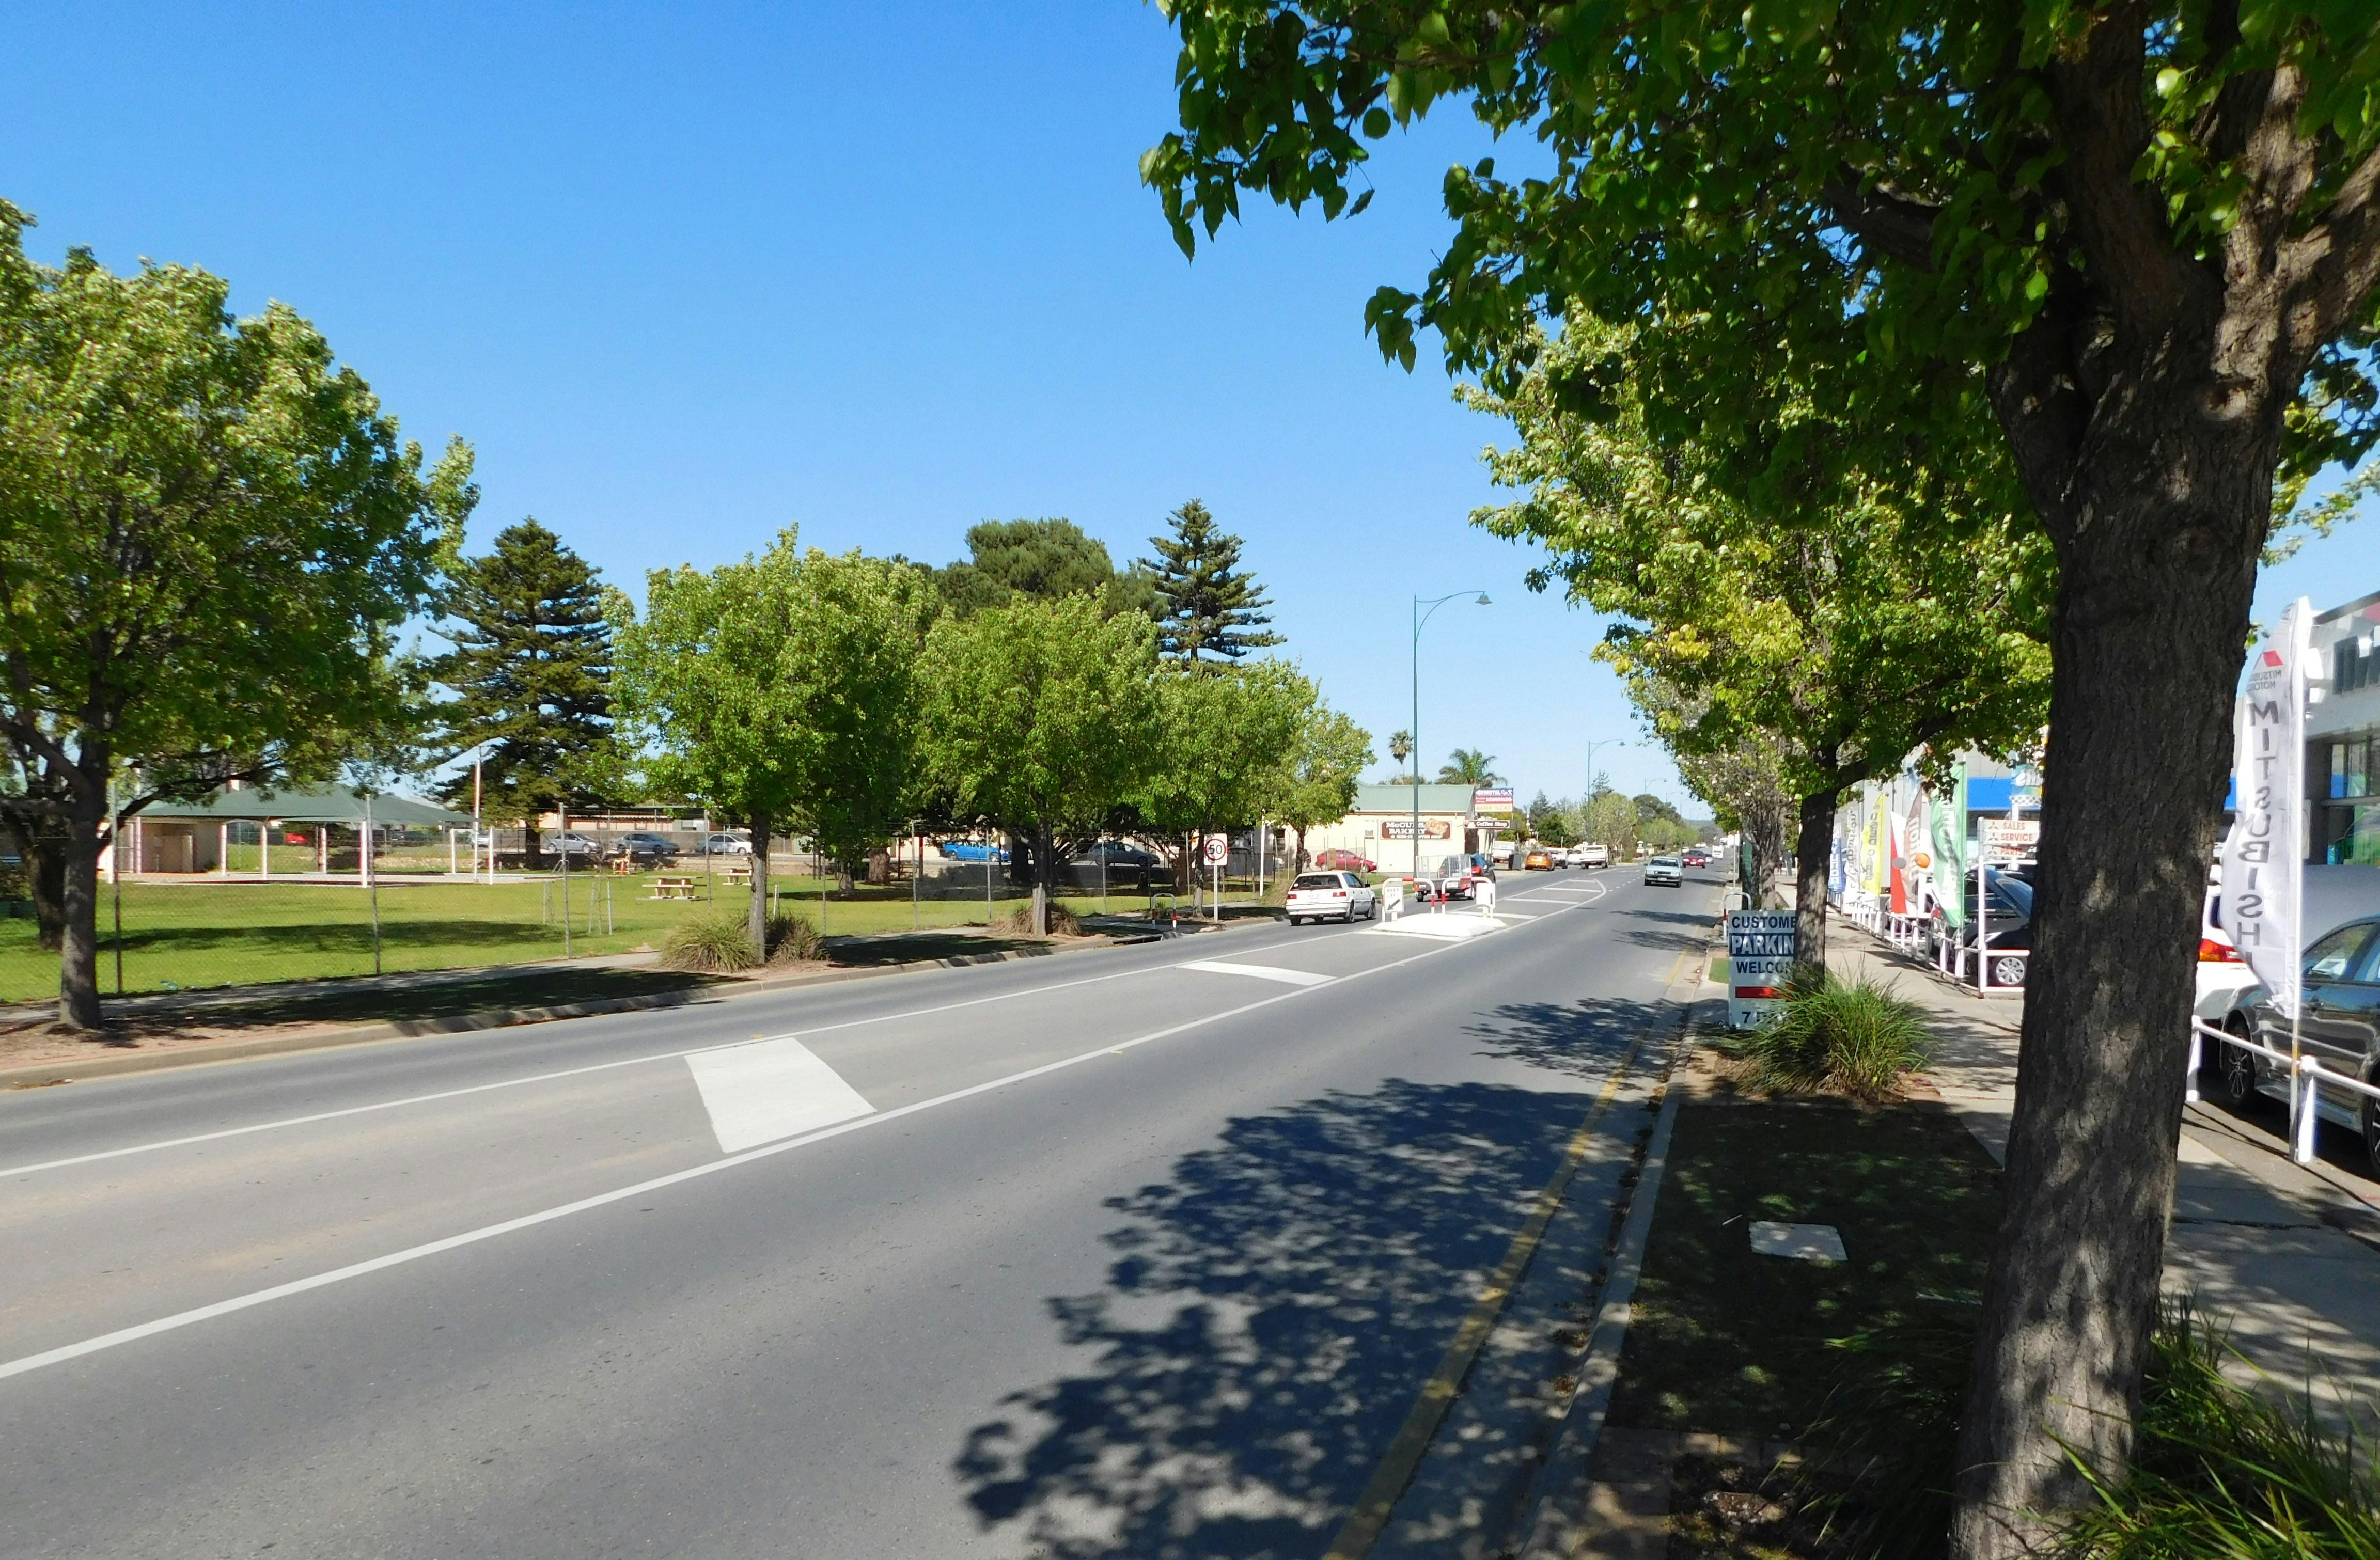 Adelaide Road Trees